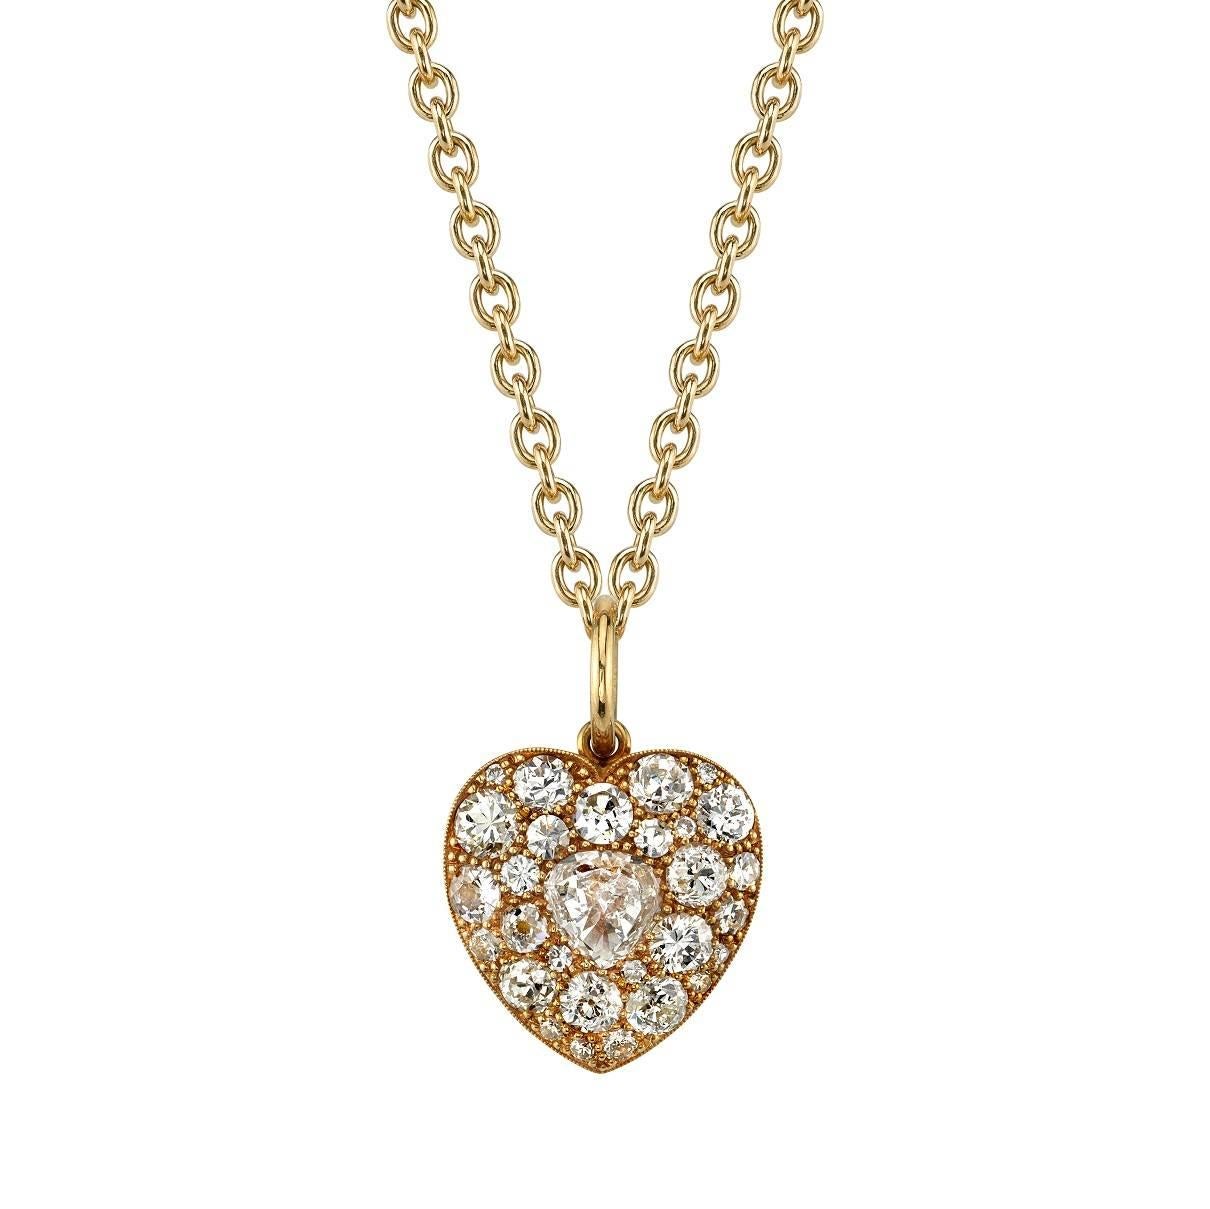 2.50 Carat Vintage Diamond Heart Pendant